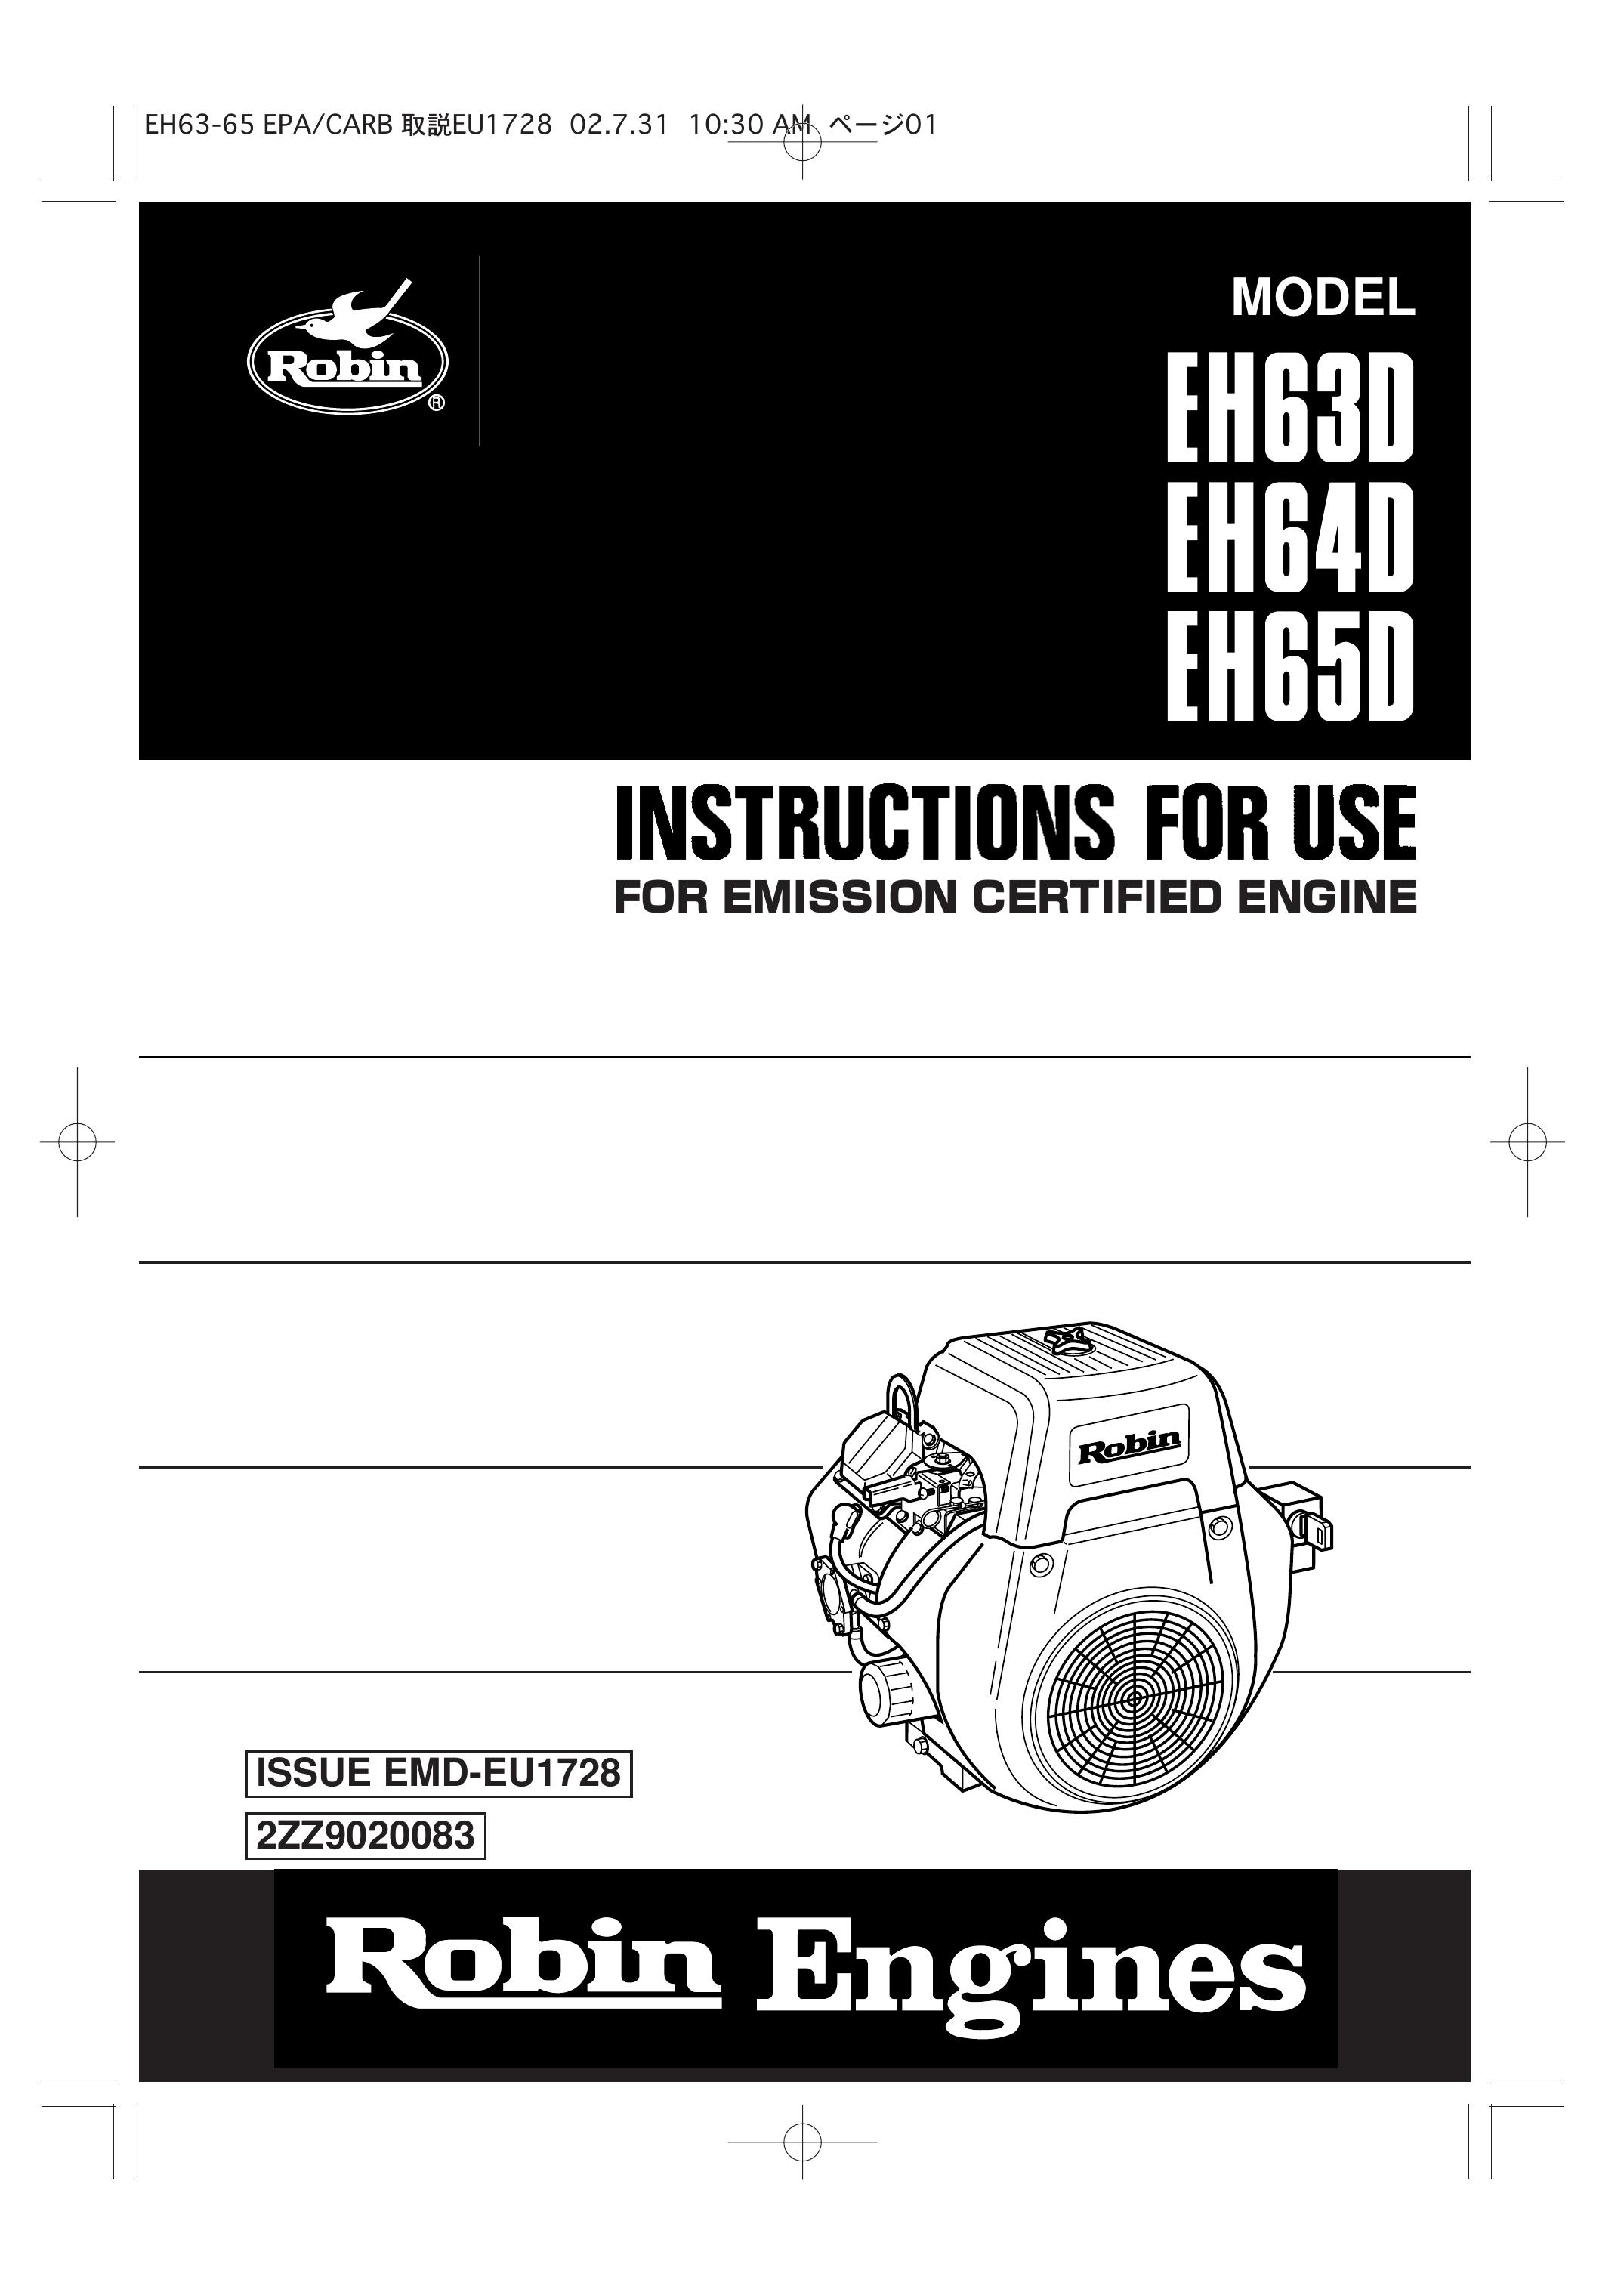 Subaru Robin Power Products EH63D Portable Generator User Manual